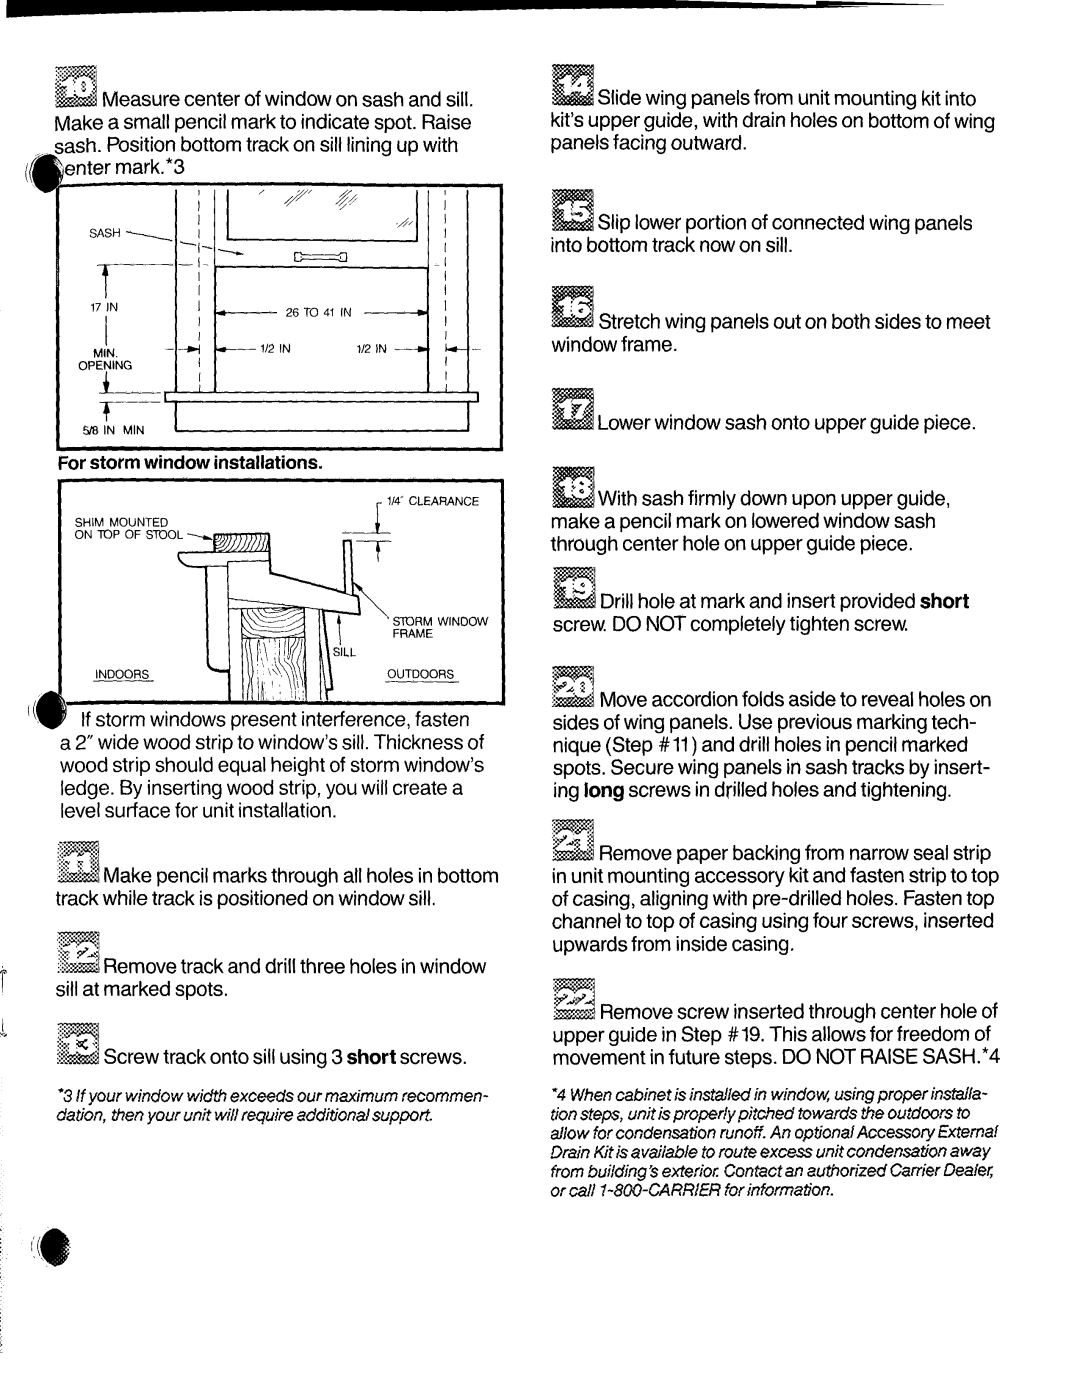 Carrier 51QC/QG manual 